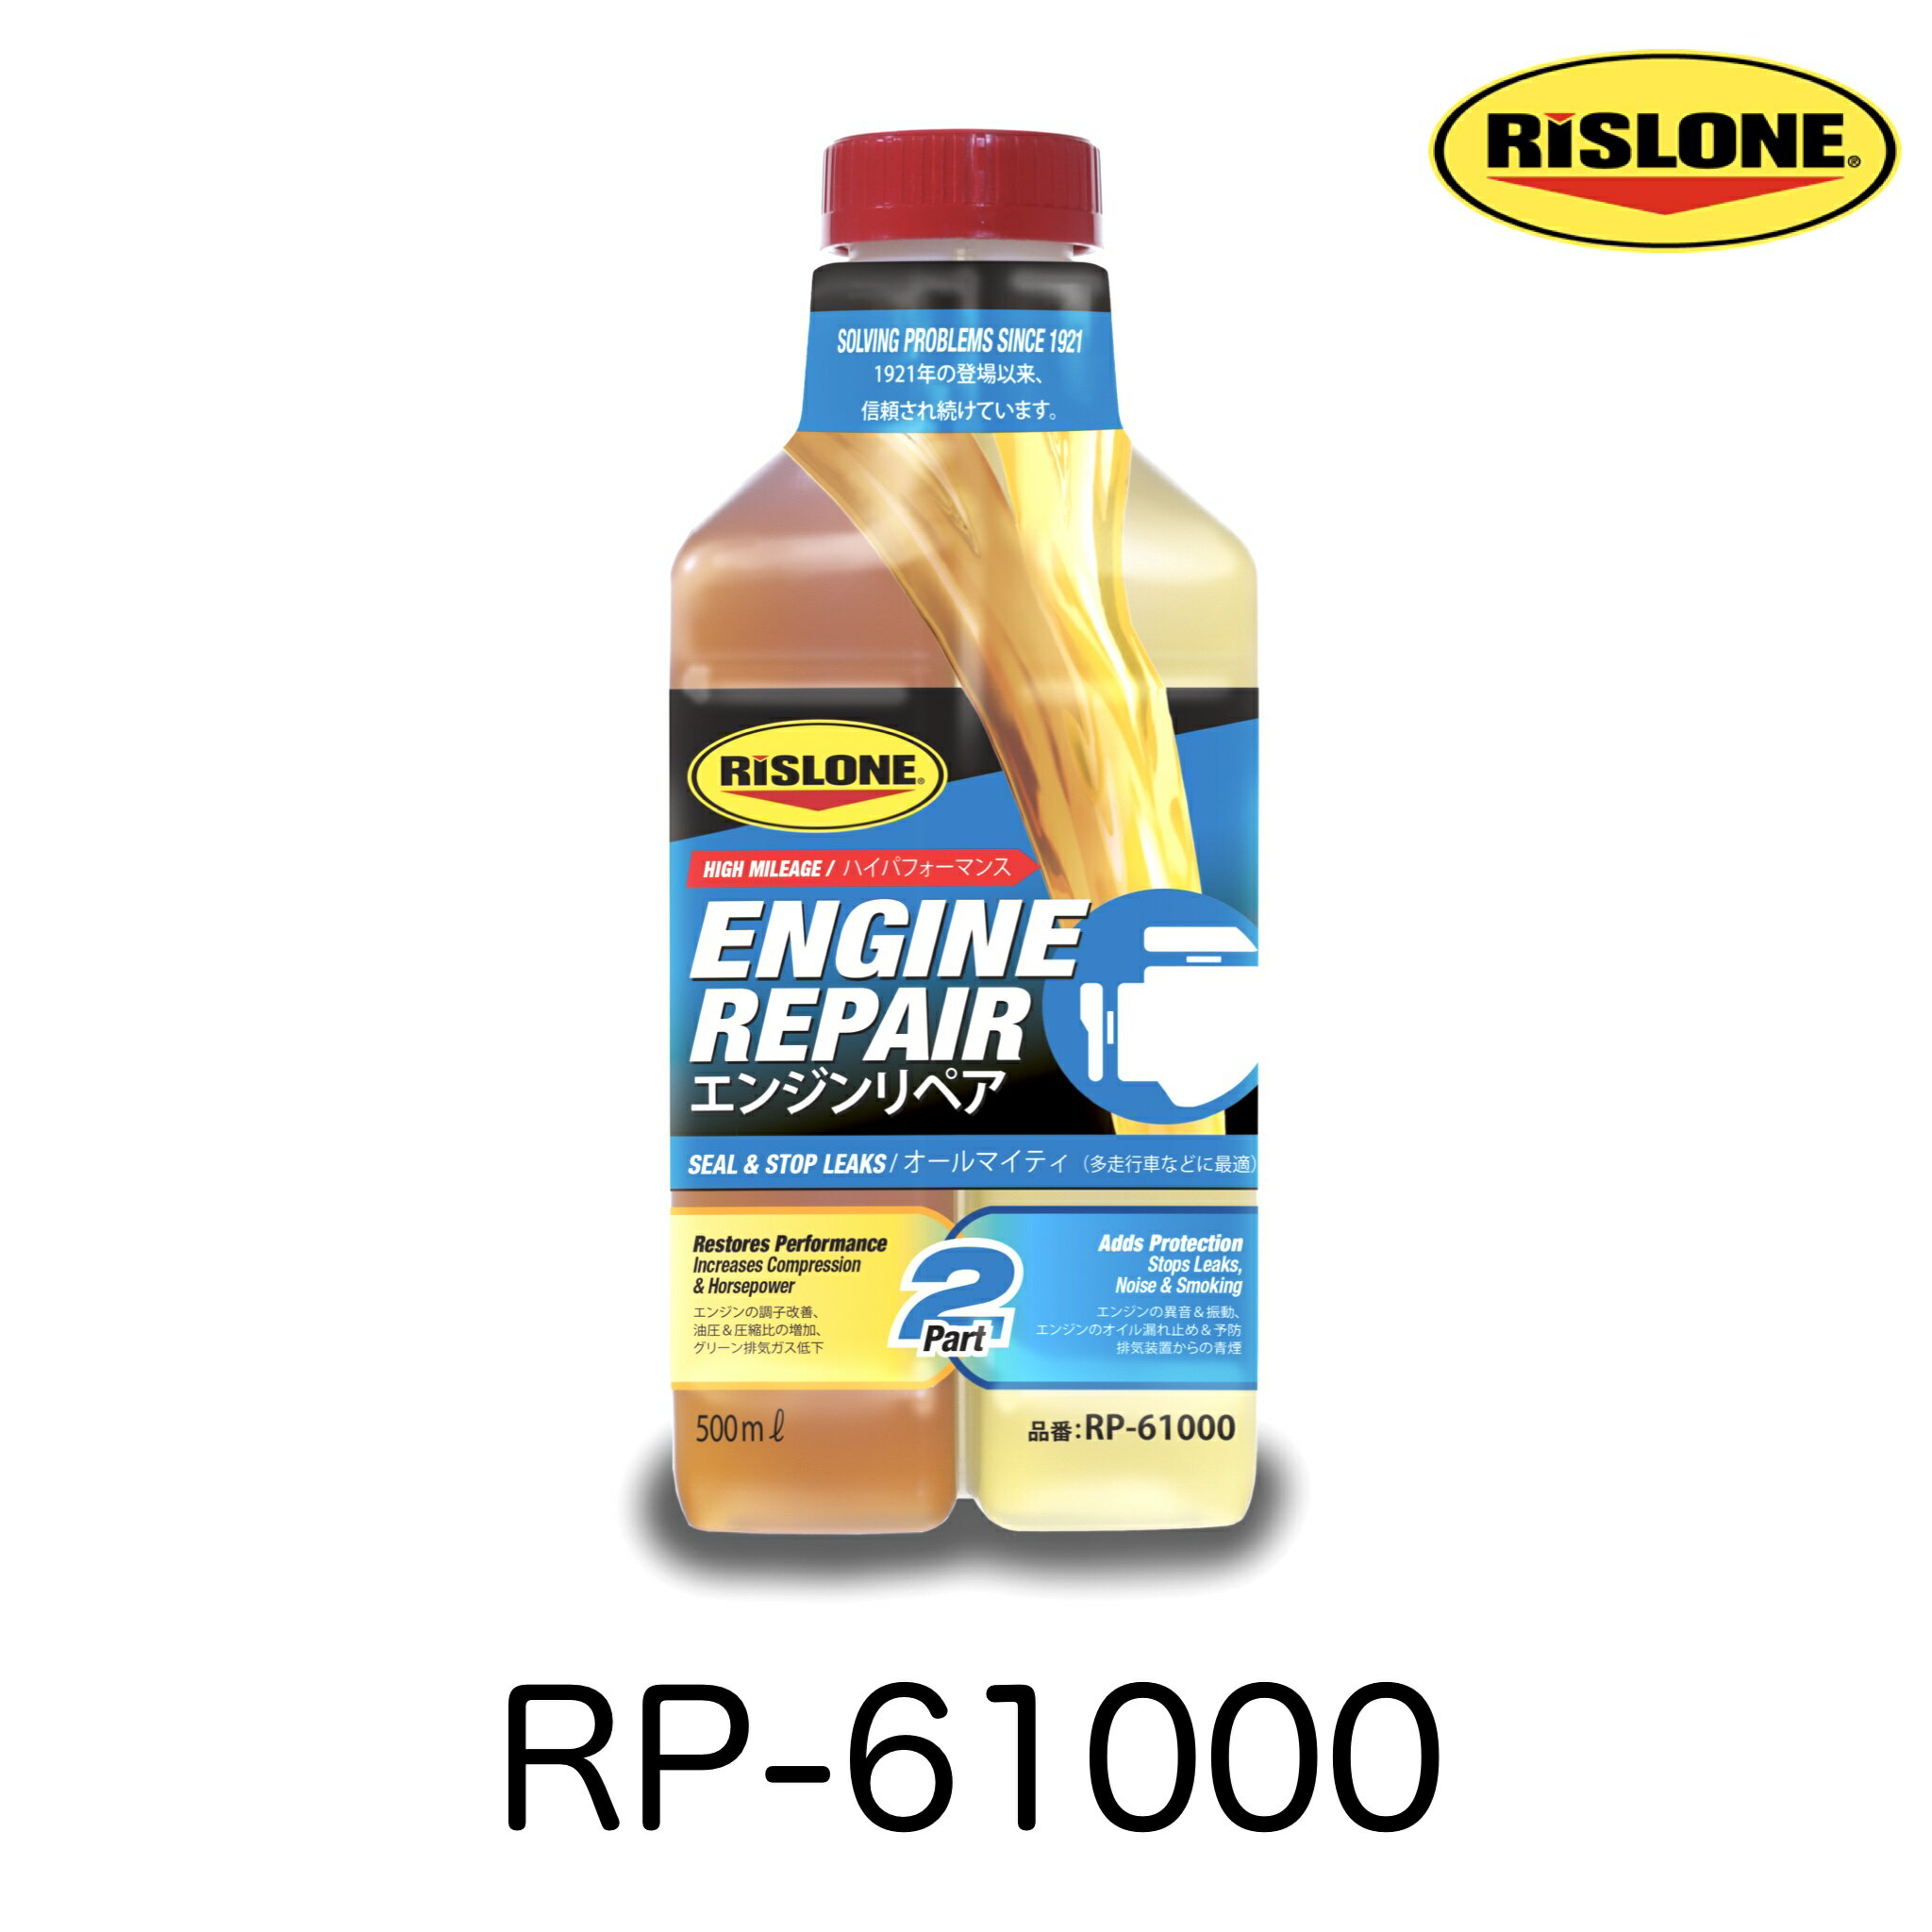 RP-61000 RISLONE リスロン リスローン エンジンリペア 500ml エンジン添加剤 オイル上がり 異音 金属摩耗 洗浄 漏れ 中古車 ディーゼル車 ガソリン車